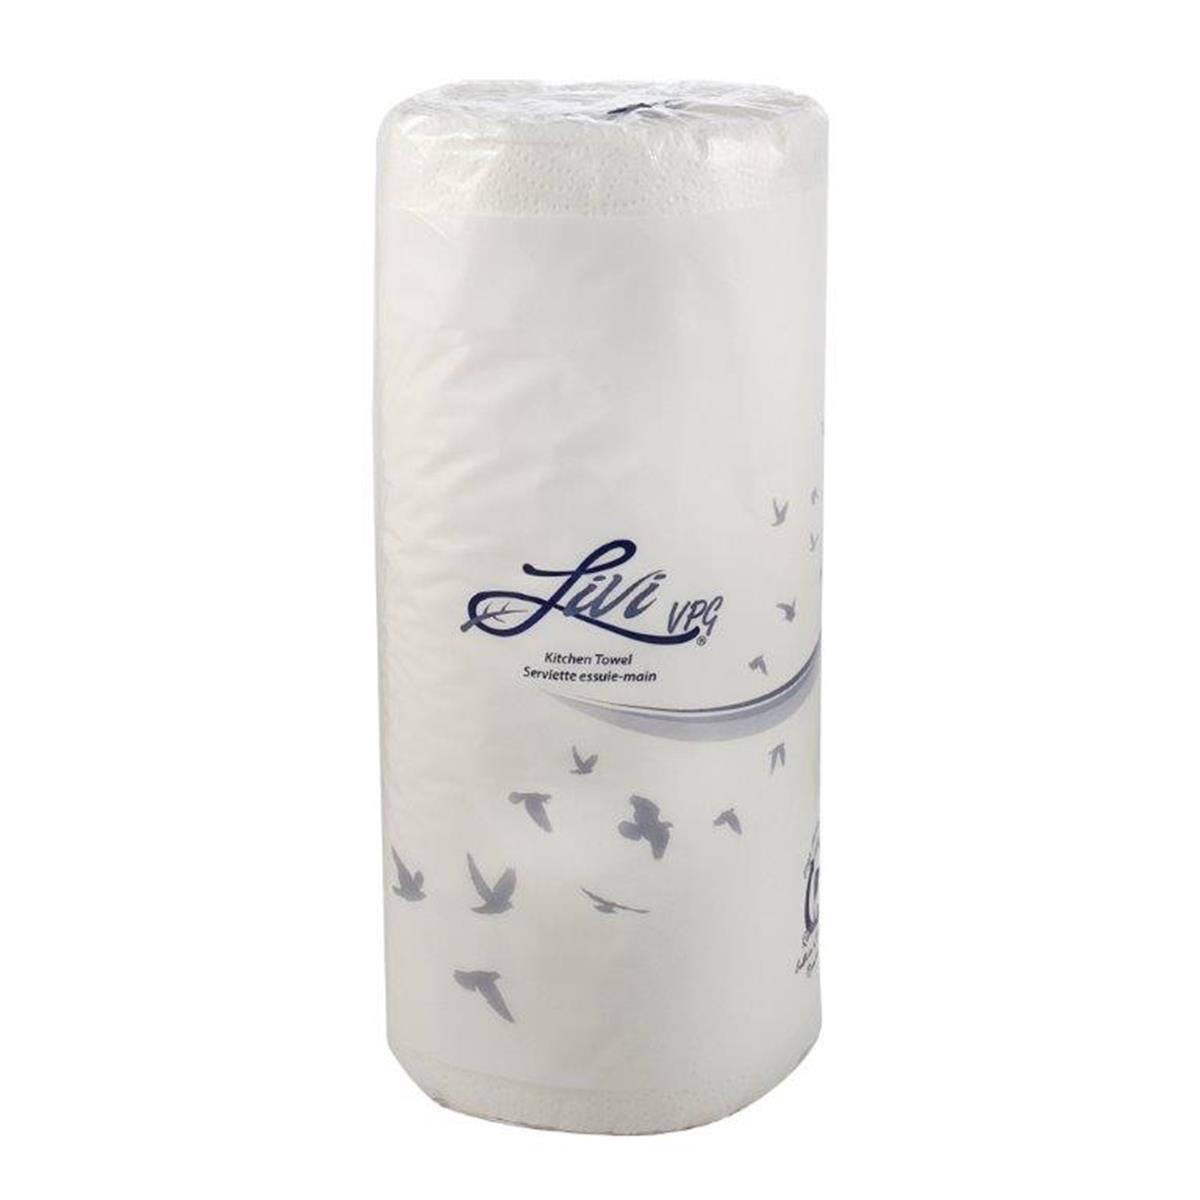 41504 Pec Livi 2ply 85 Sheet Hard Roll Towel, White - Pack Of 30